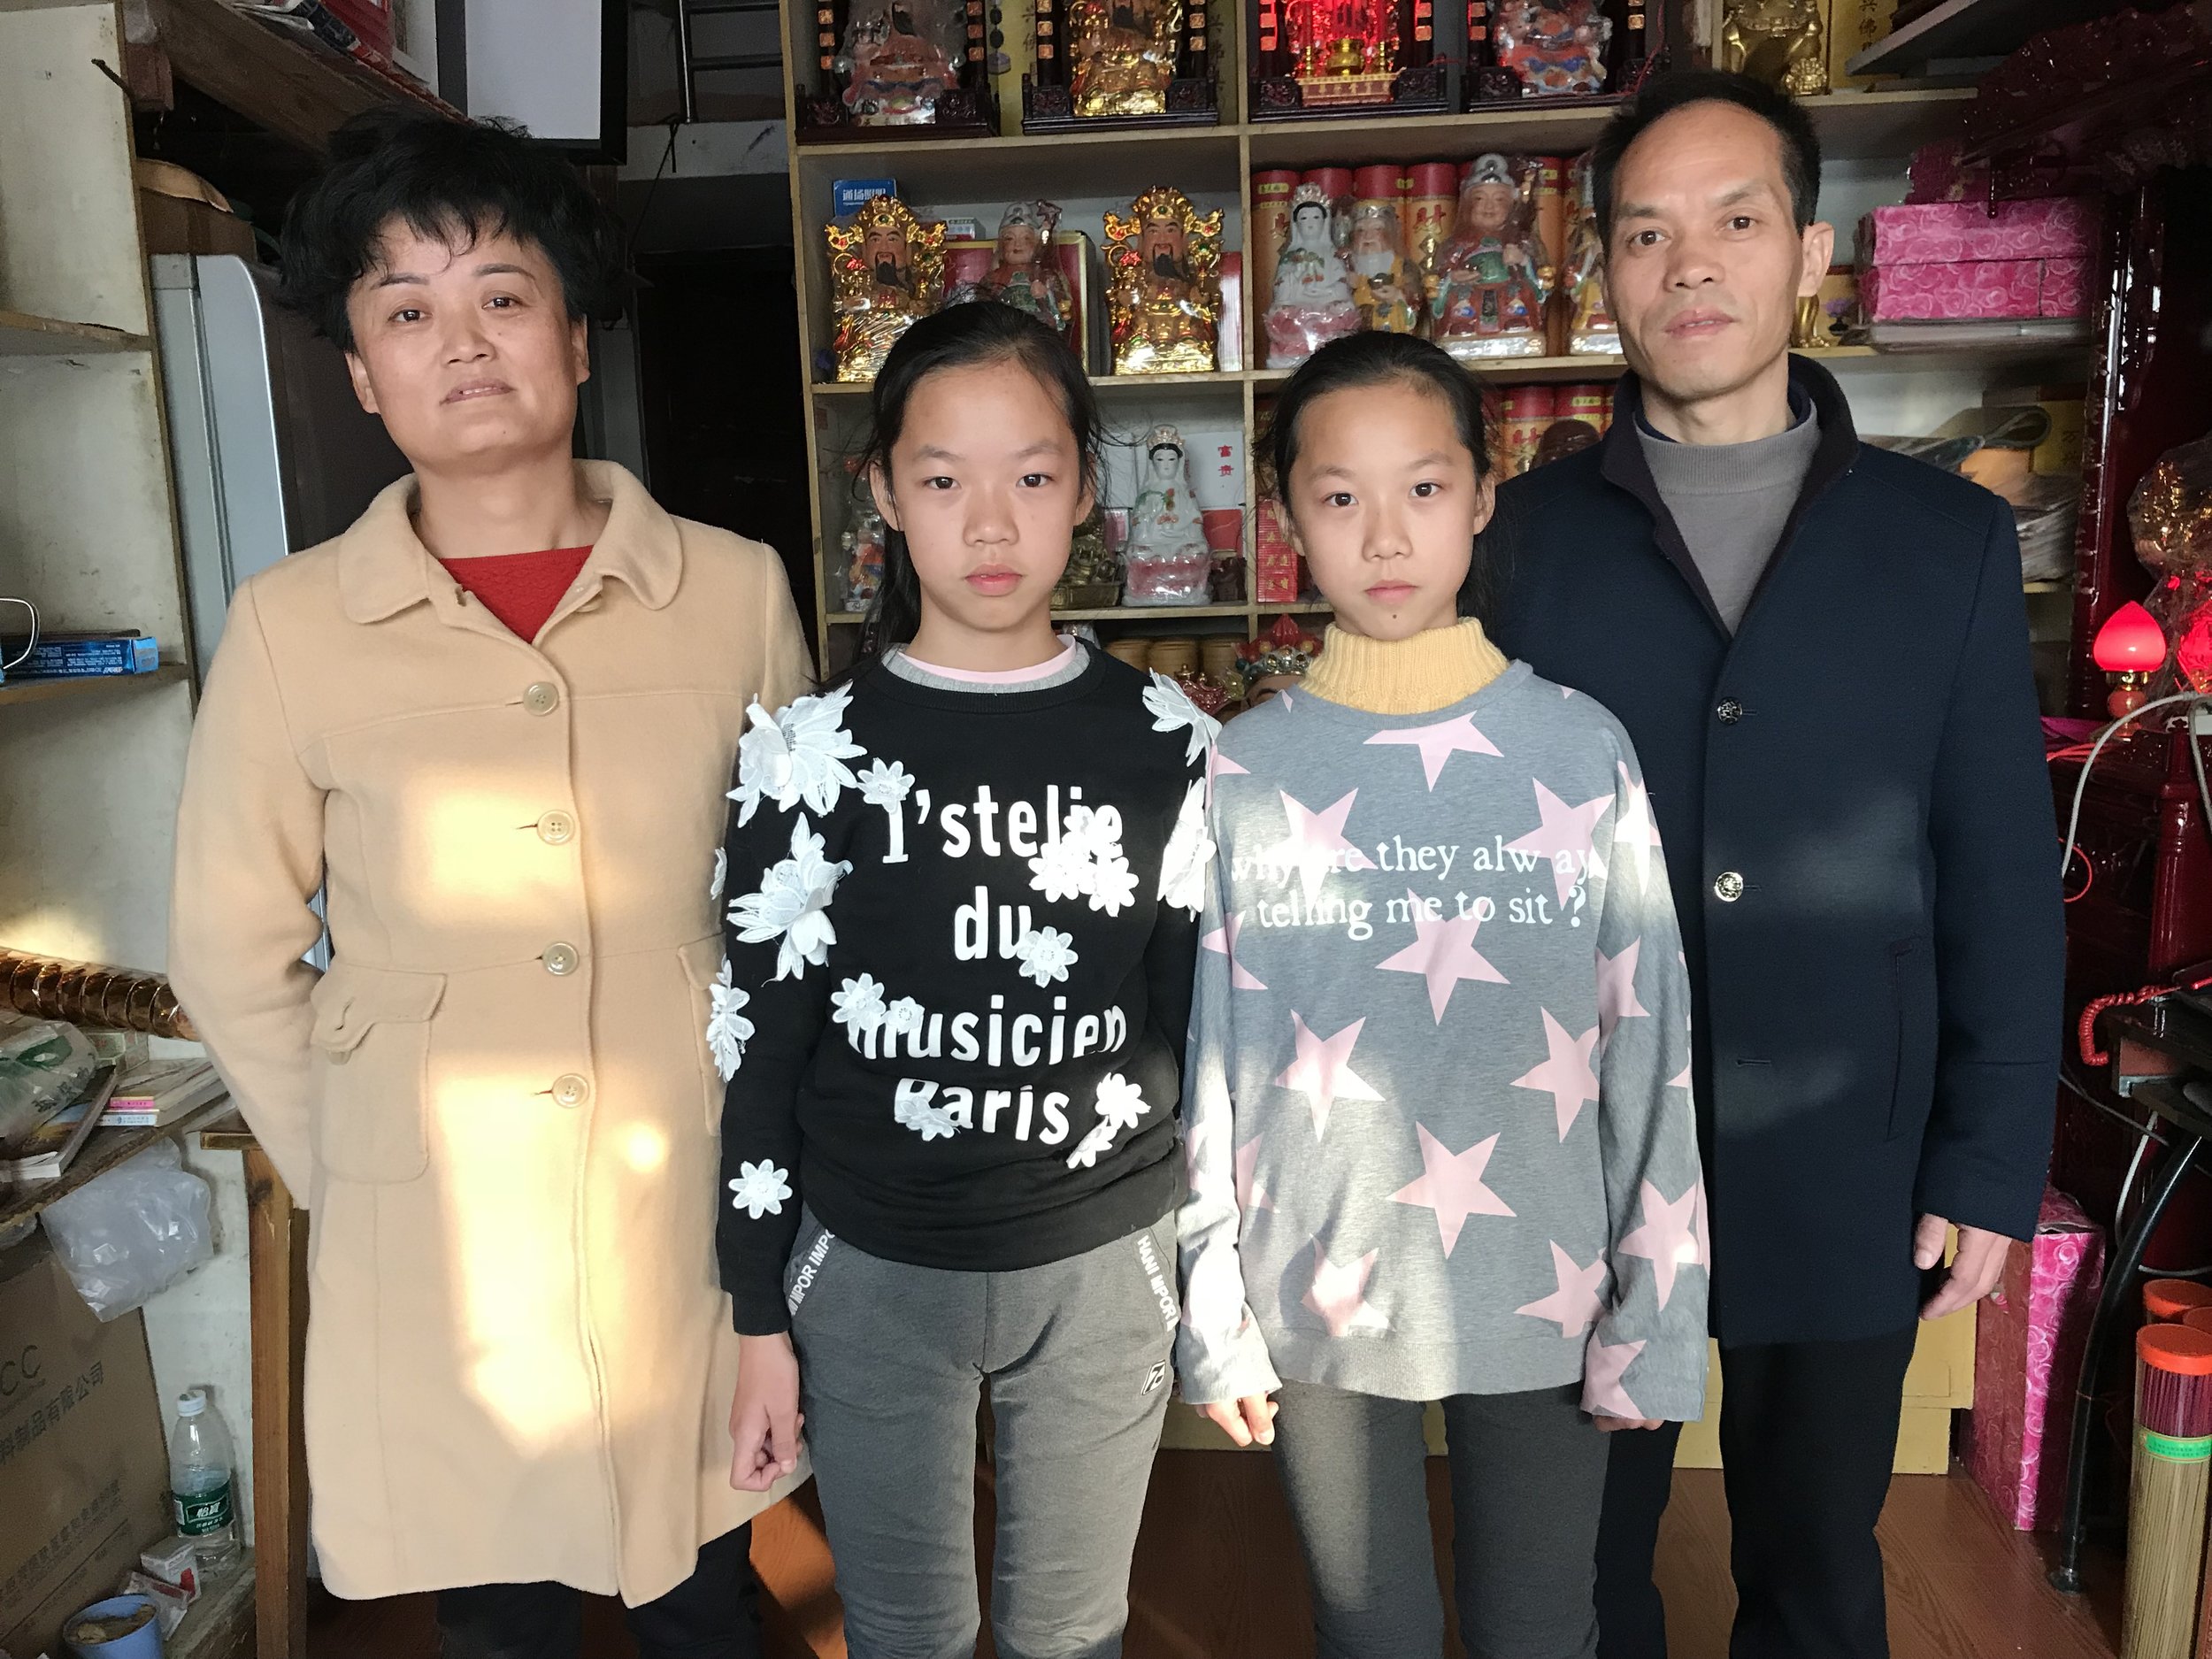  Mother, Zhu Yuan e, and father Xin Xian Shou, with their daughters inside the incense shop, 2017. 